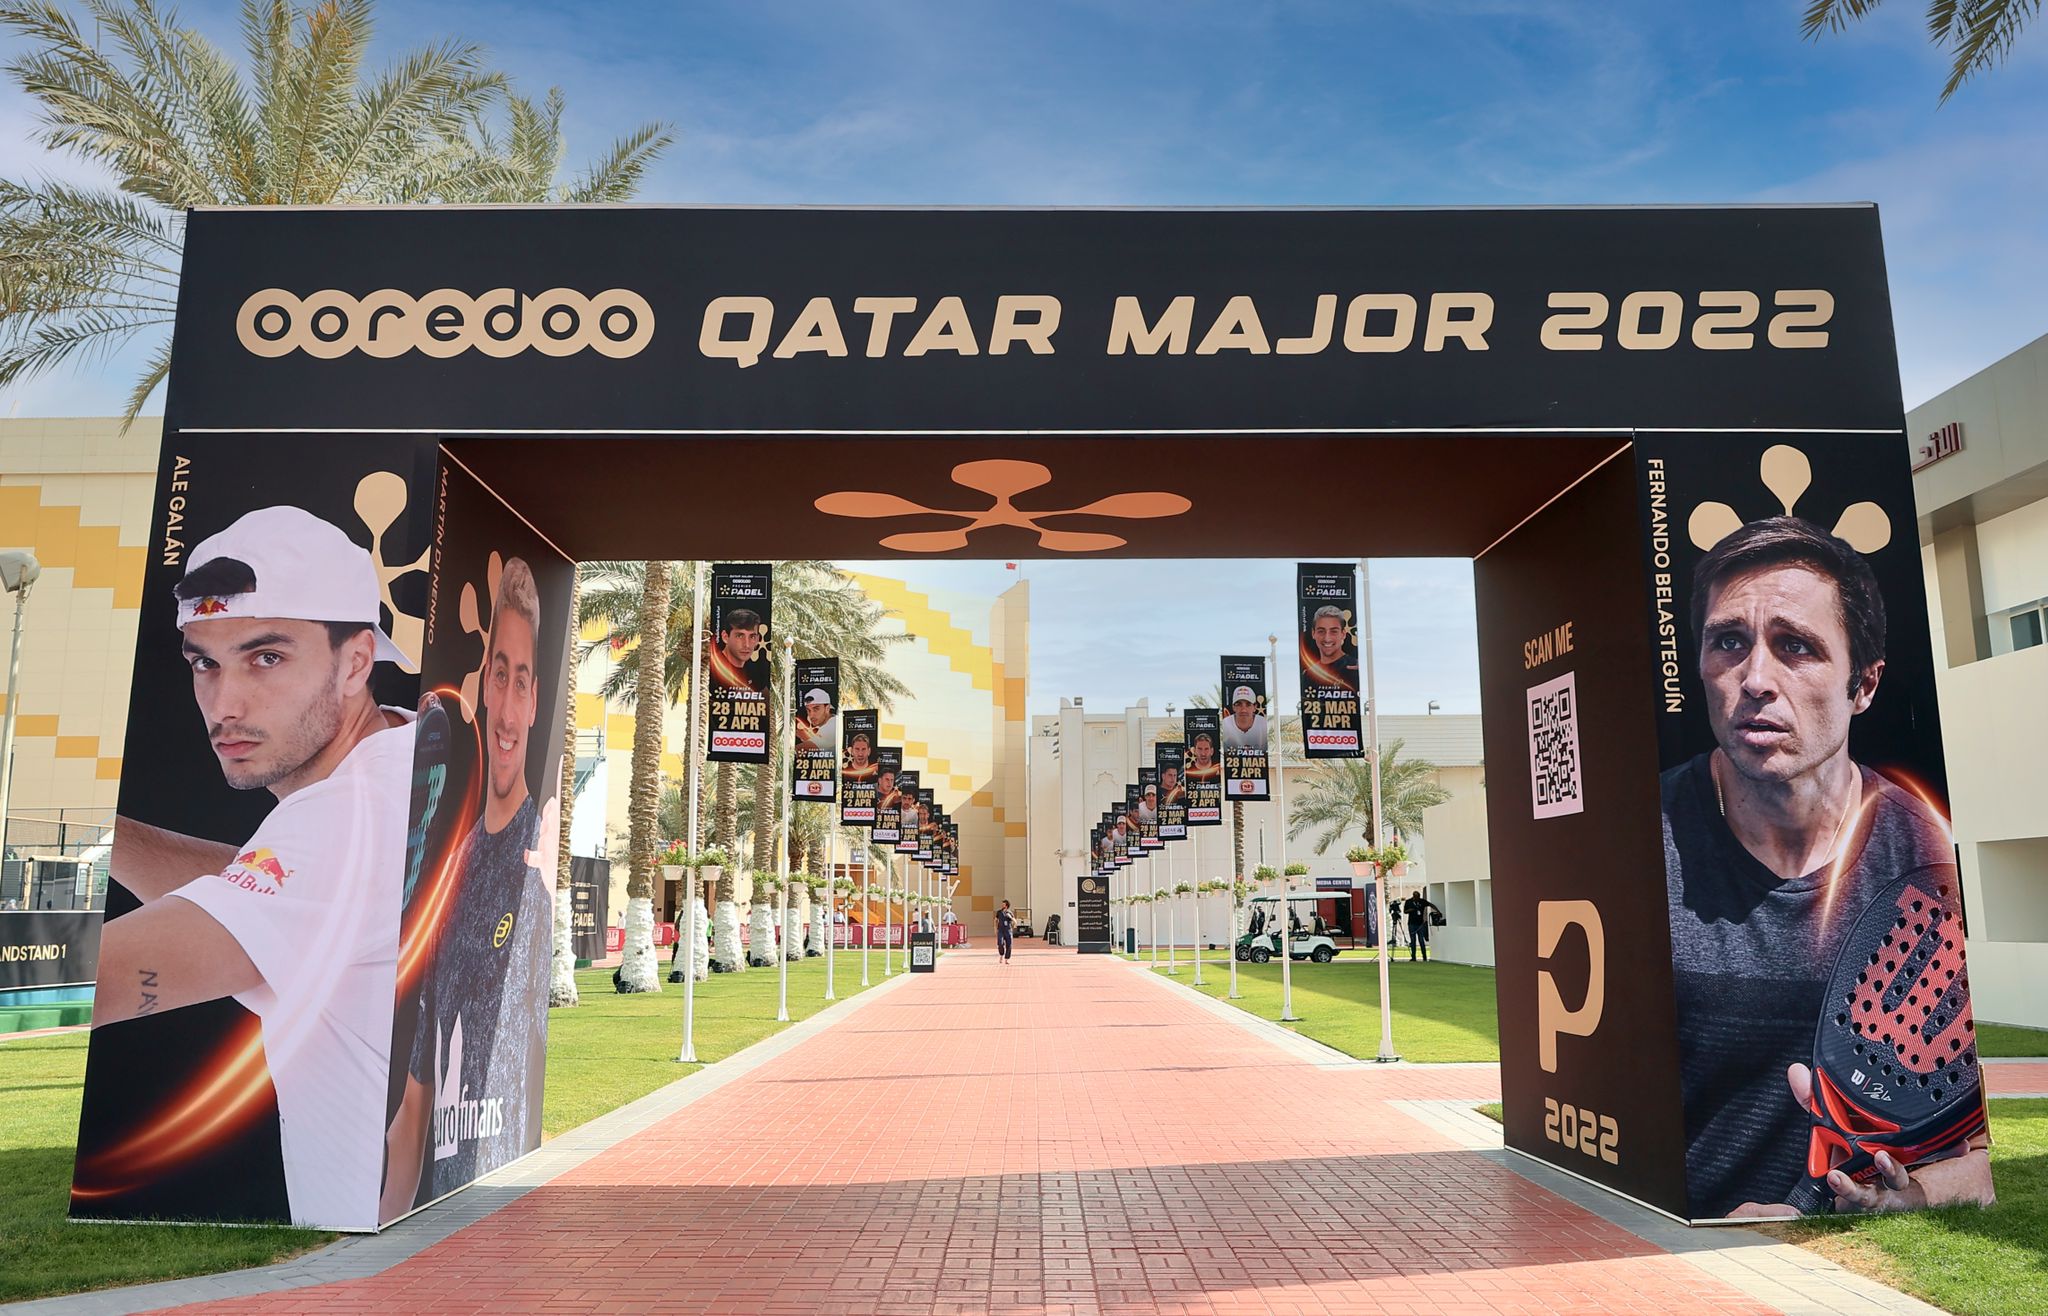 Entry Khalifa Doha Qatar Major 2022